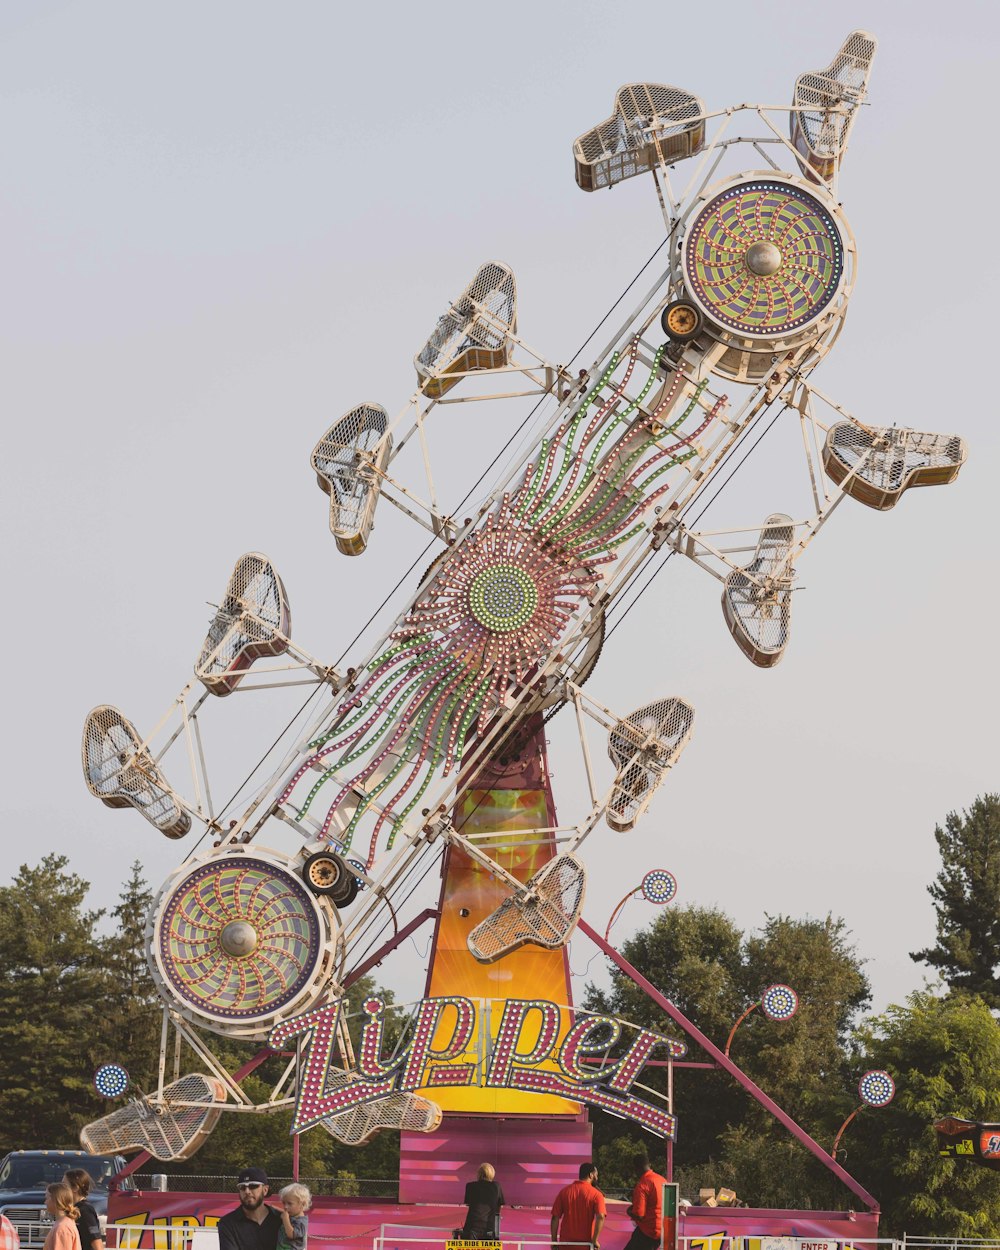 a large ferris wheel in a carnival park